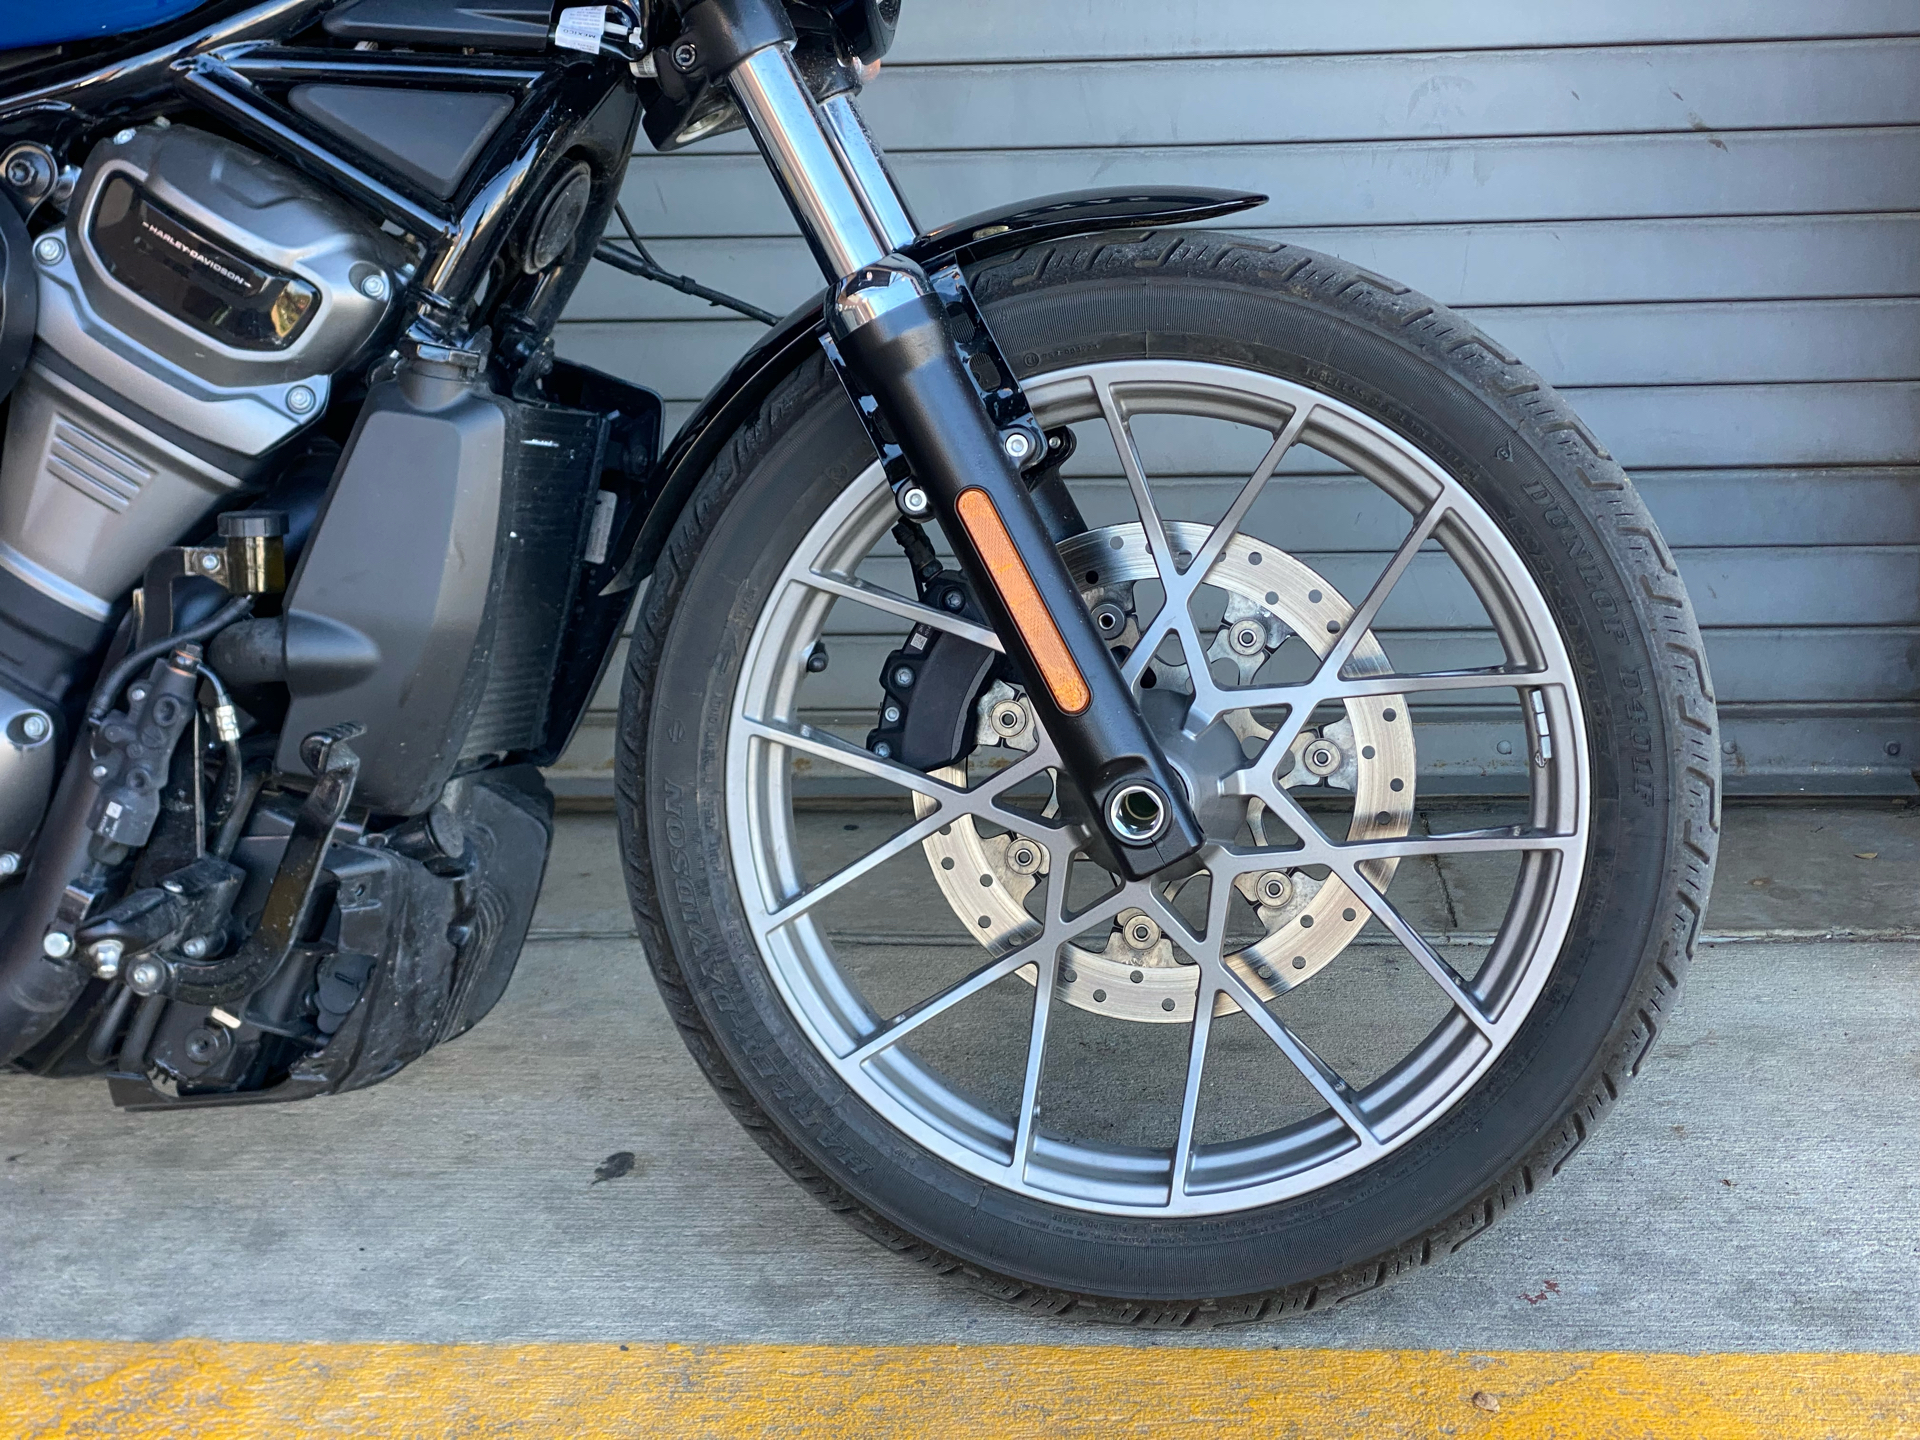 2023 Harley-Davidson Nightster® Special in Carrollton, Texas - Photo 4